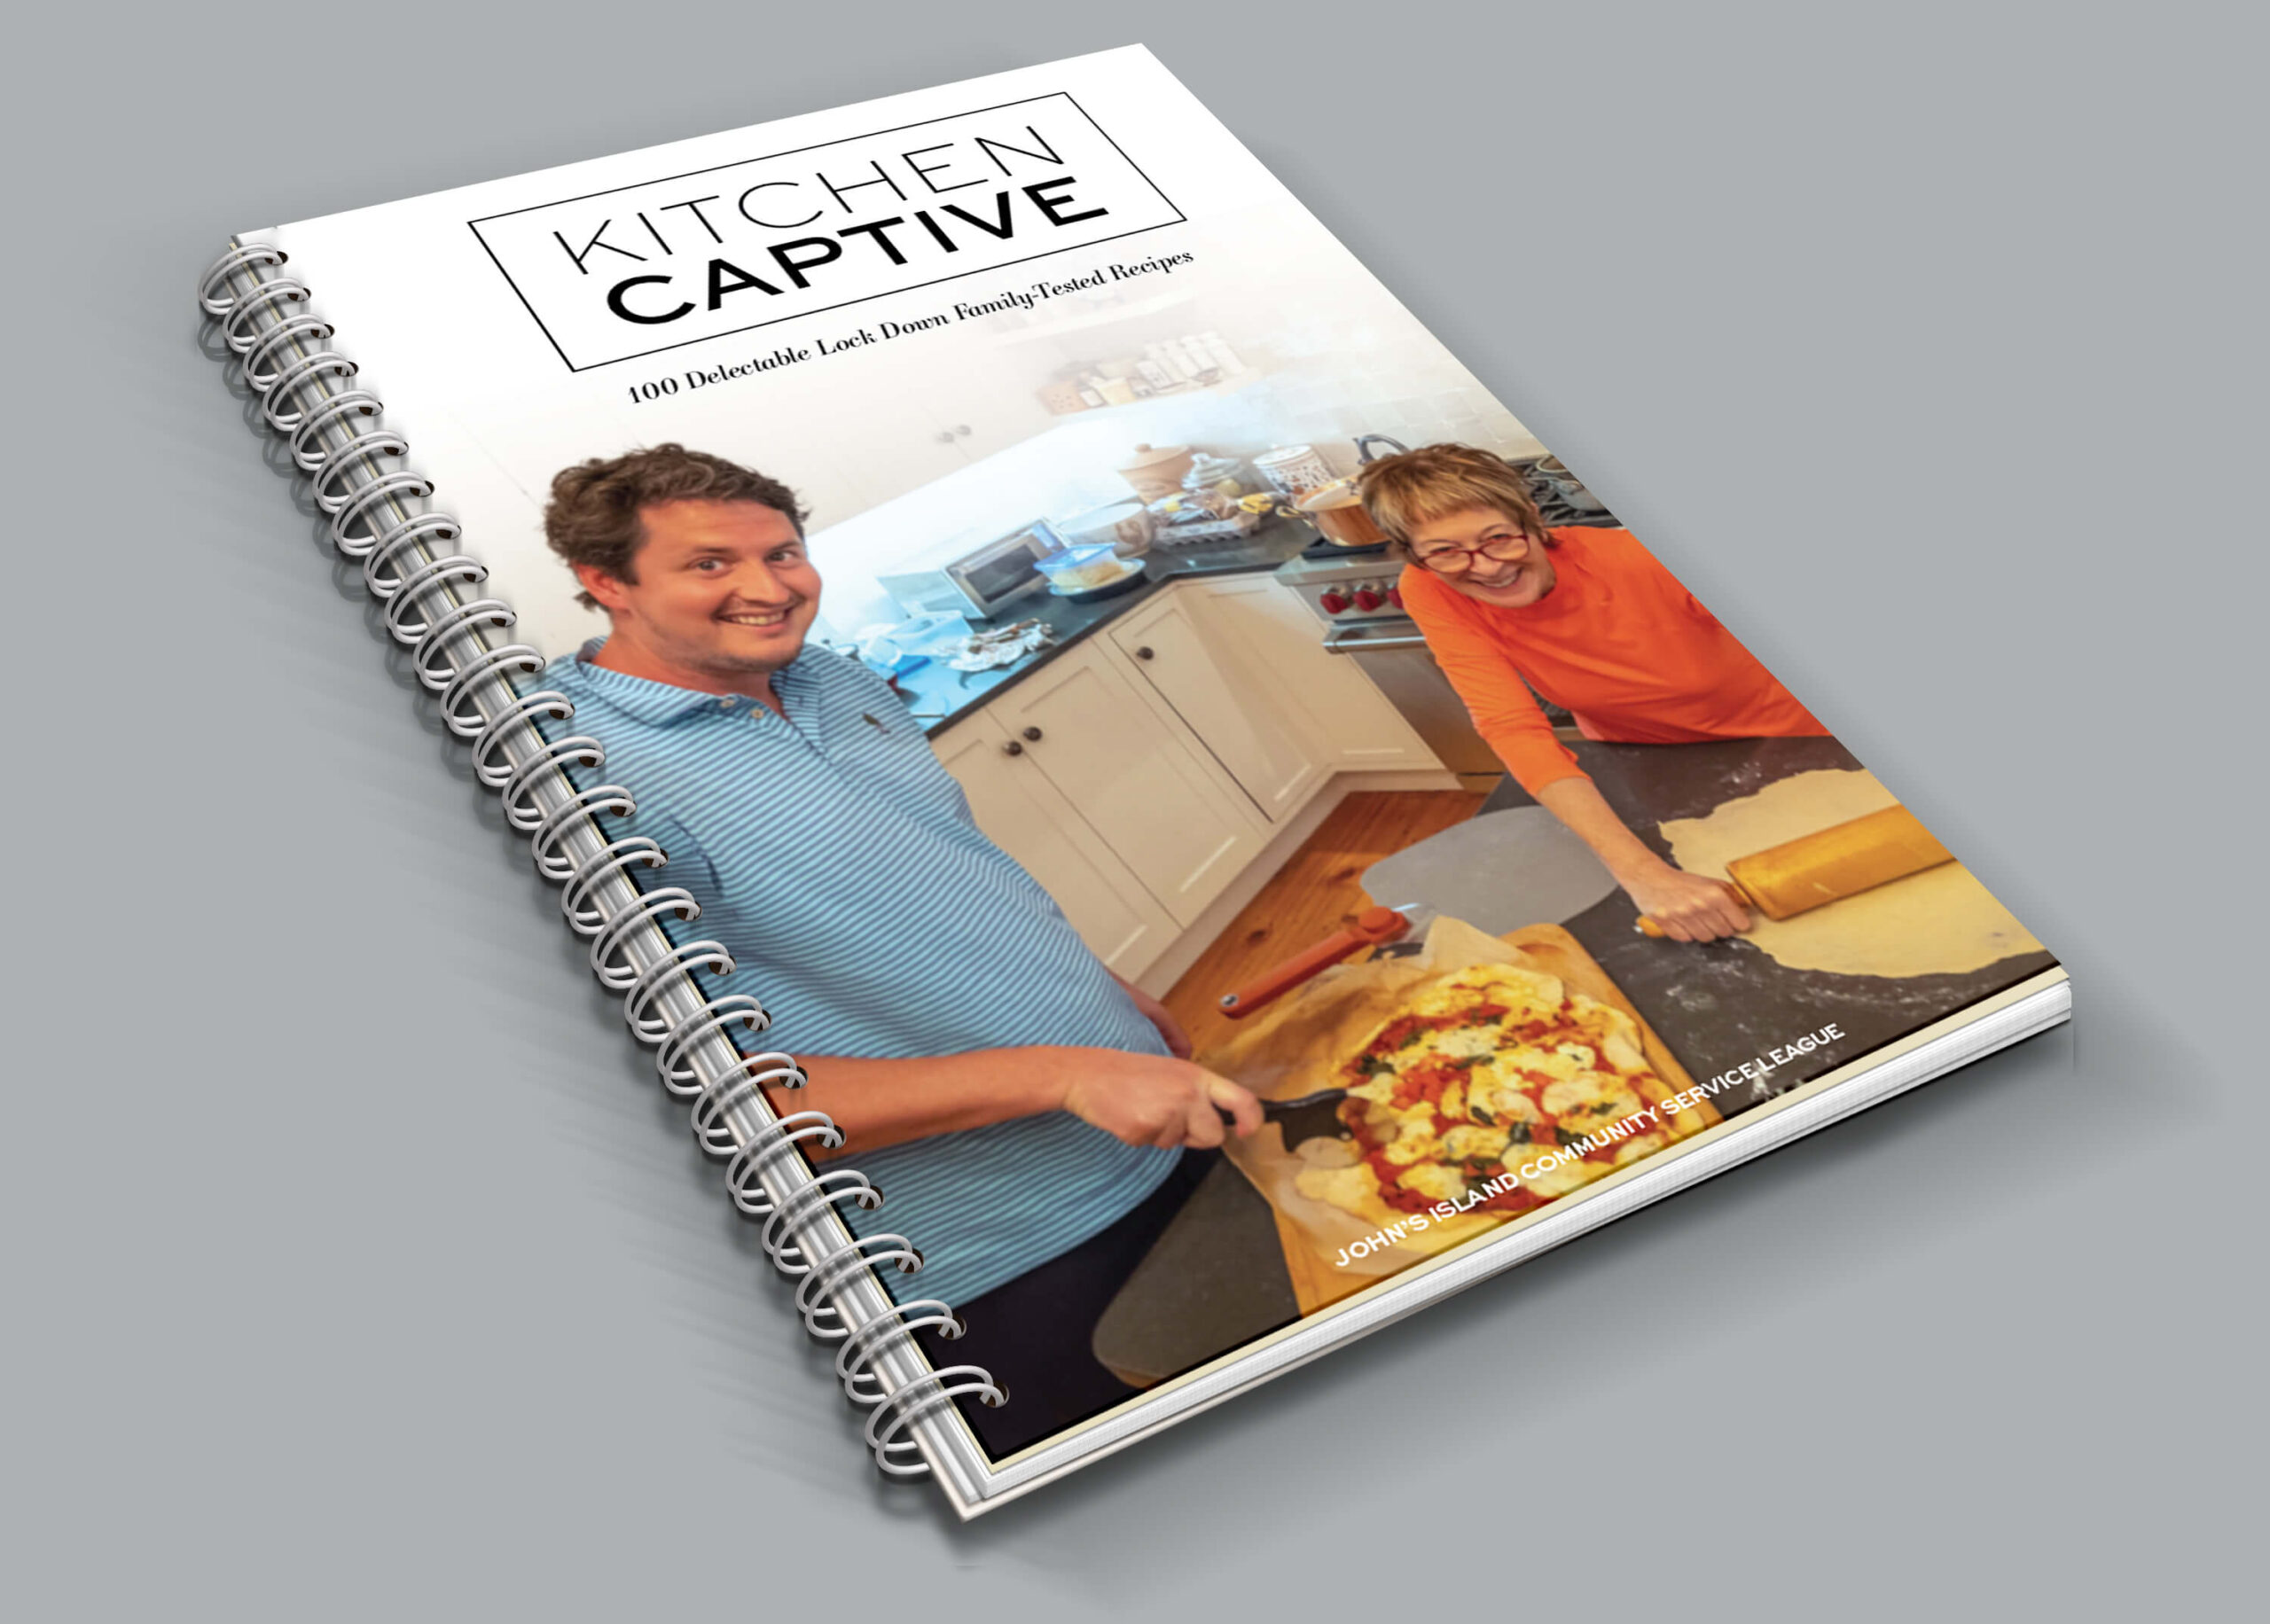 Kitchen Captive Cookbook